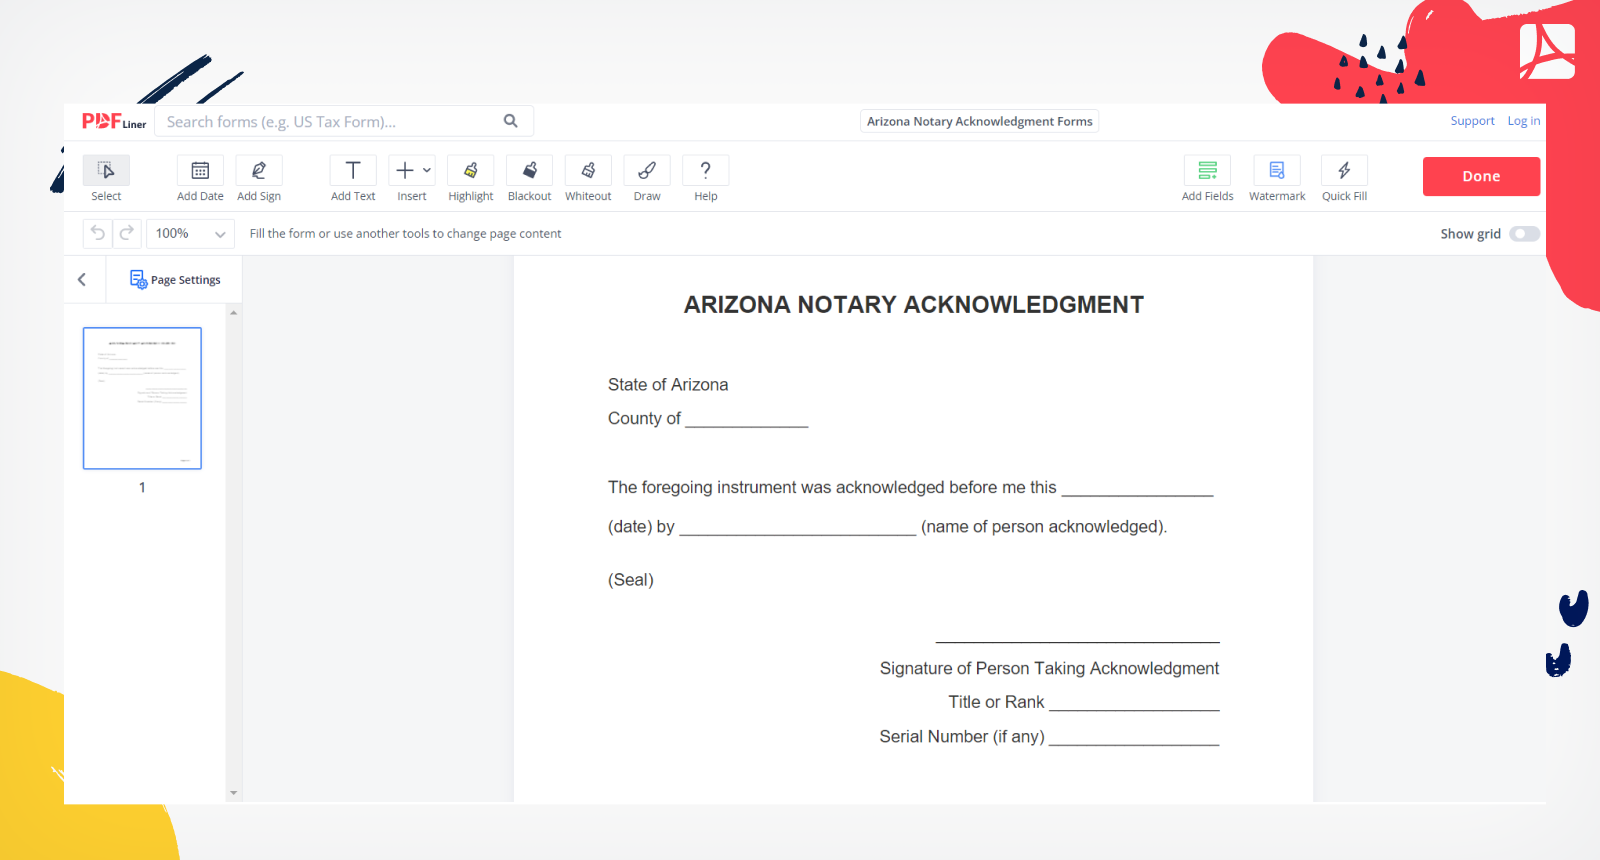 Arizona Notary Acknowledgment Form Screenshot